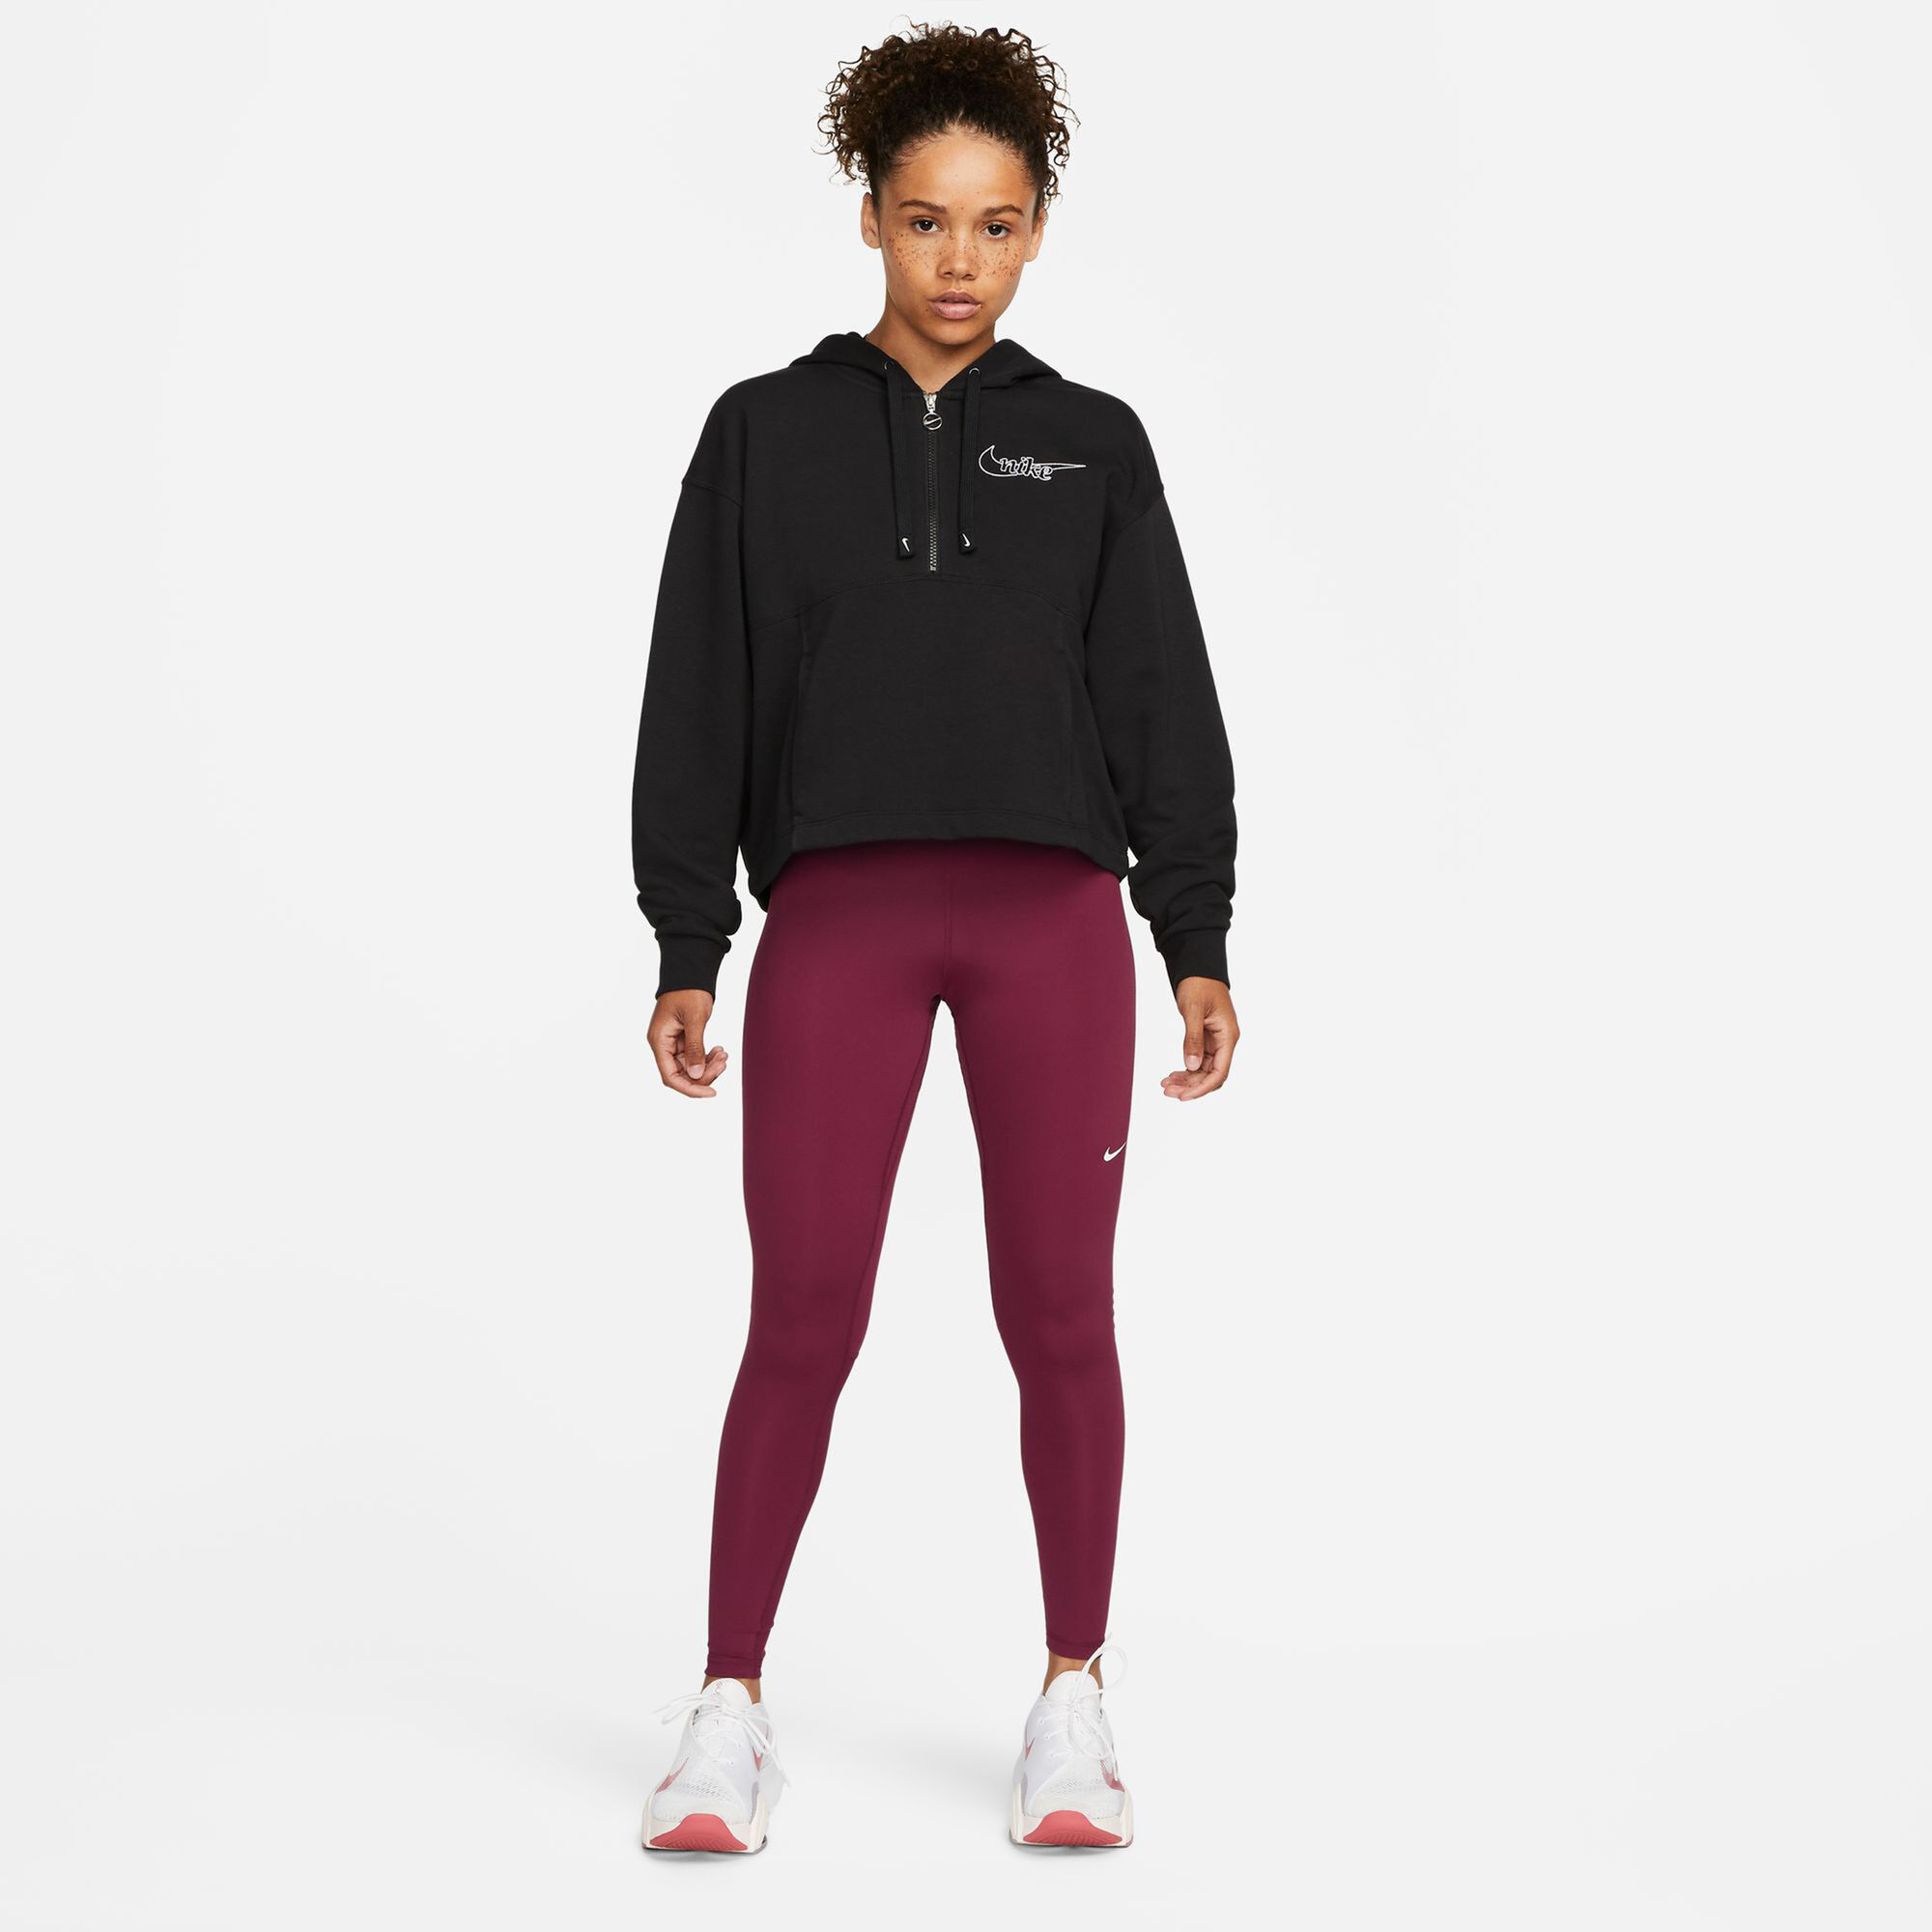 Buy Nike Pro 365 Tight Women Dark Red online